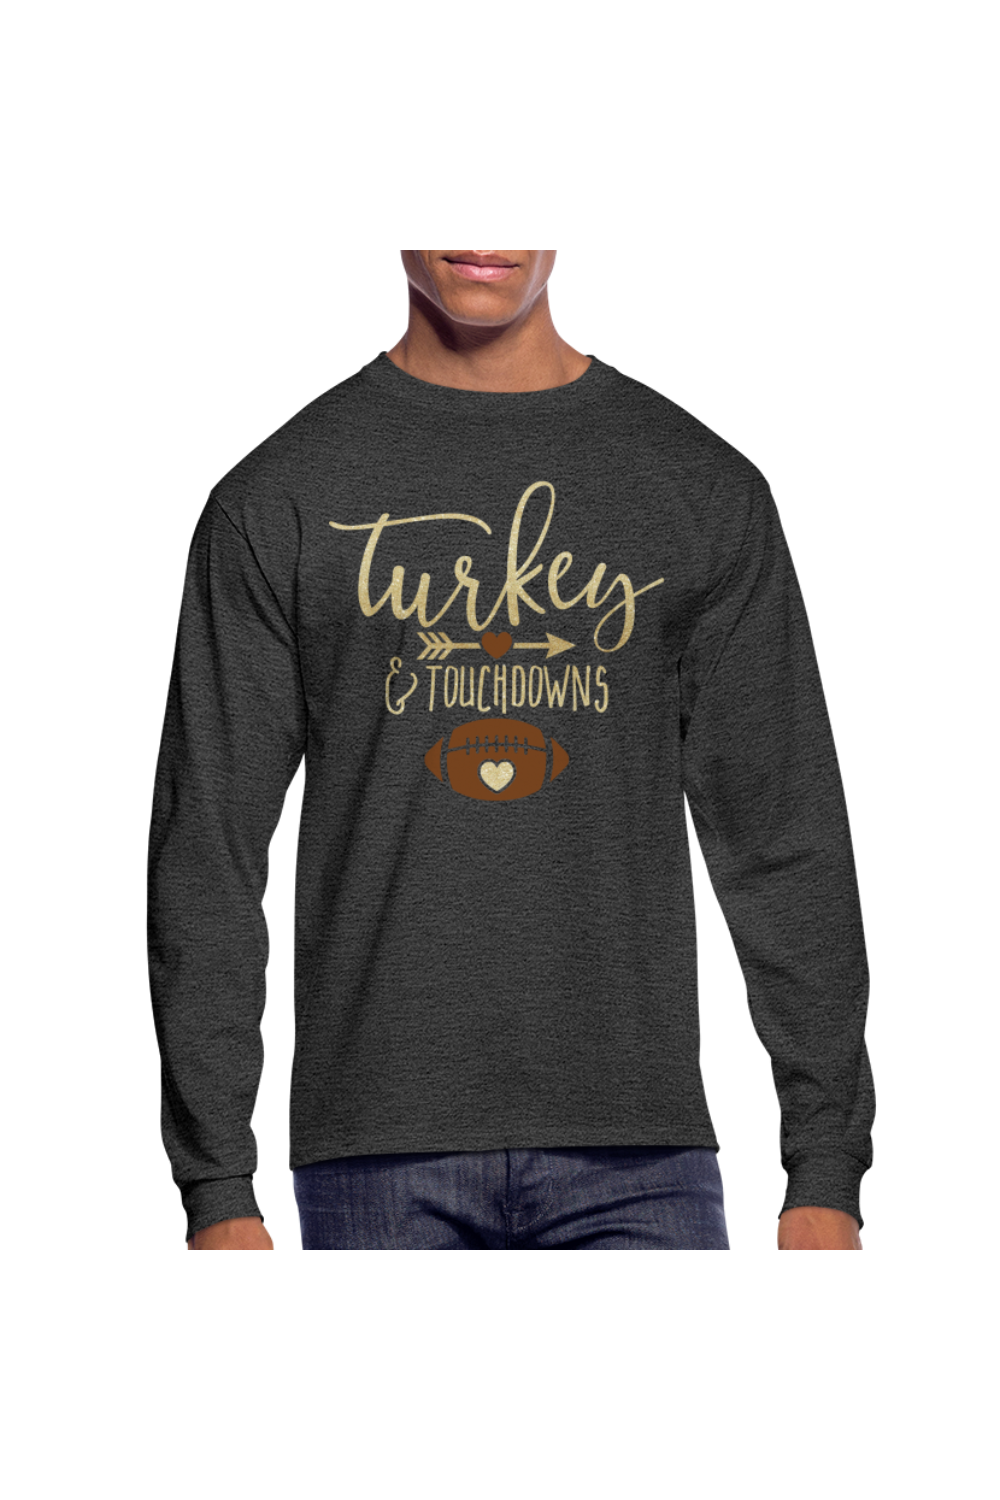 Men Thanksgiving T-Shirt Turkey and Touchdowns Long Sleeve - heather black - NicholesGifts.online